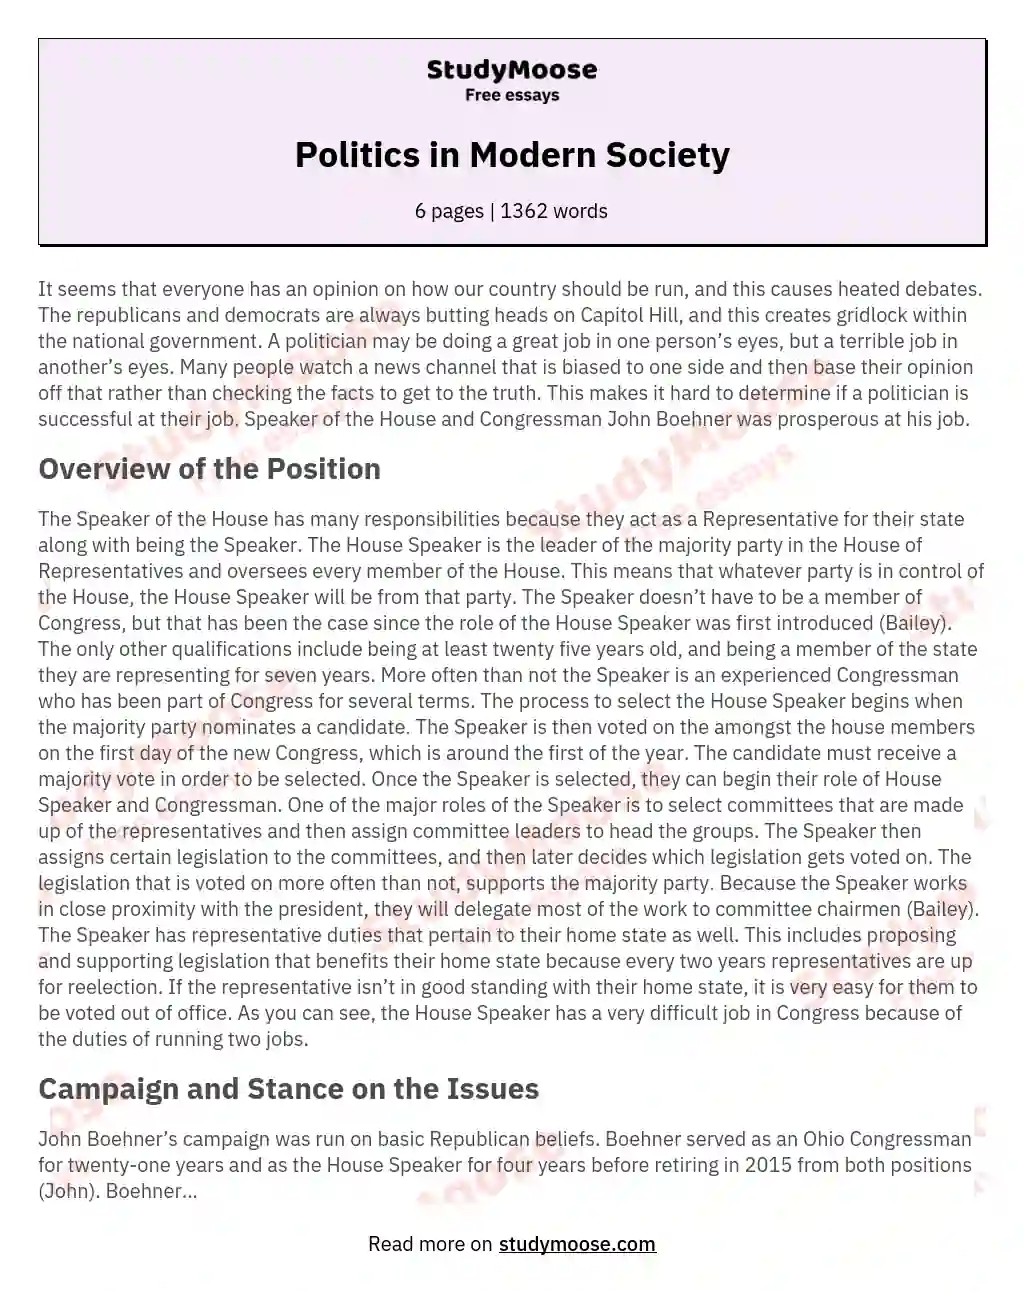 Politics in Modern Society essay